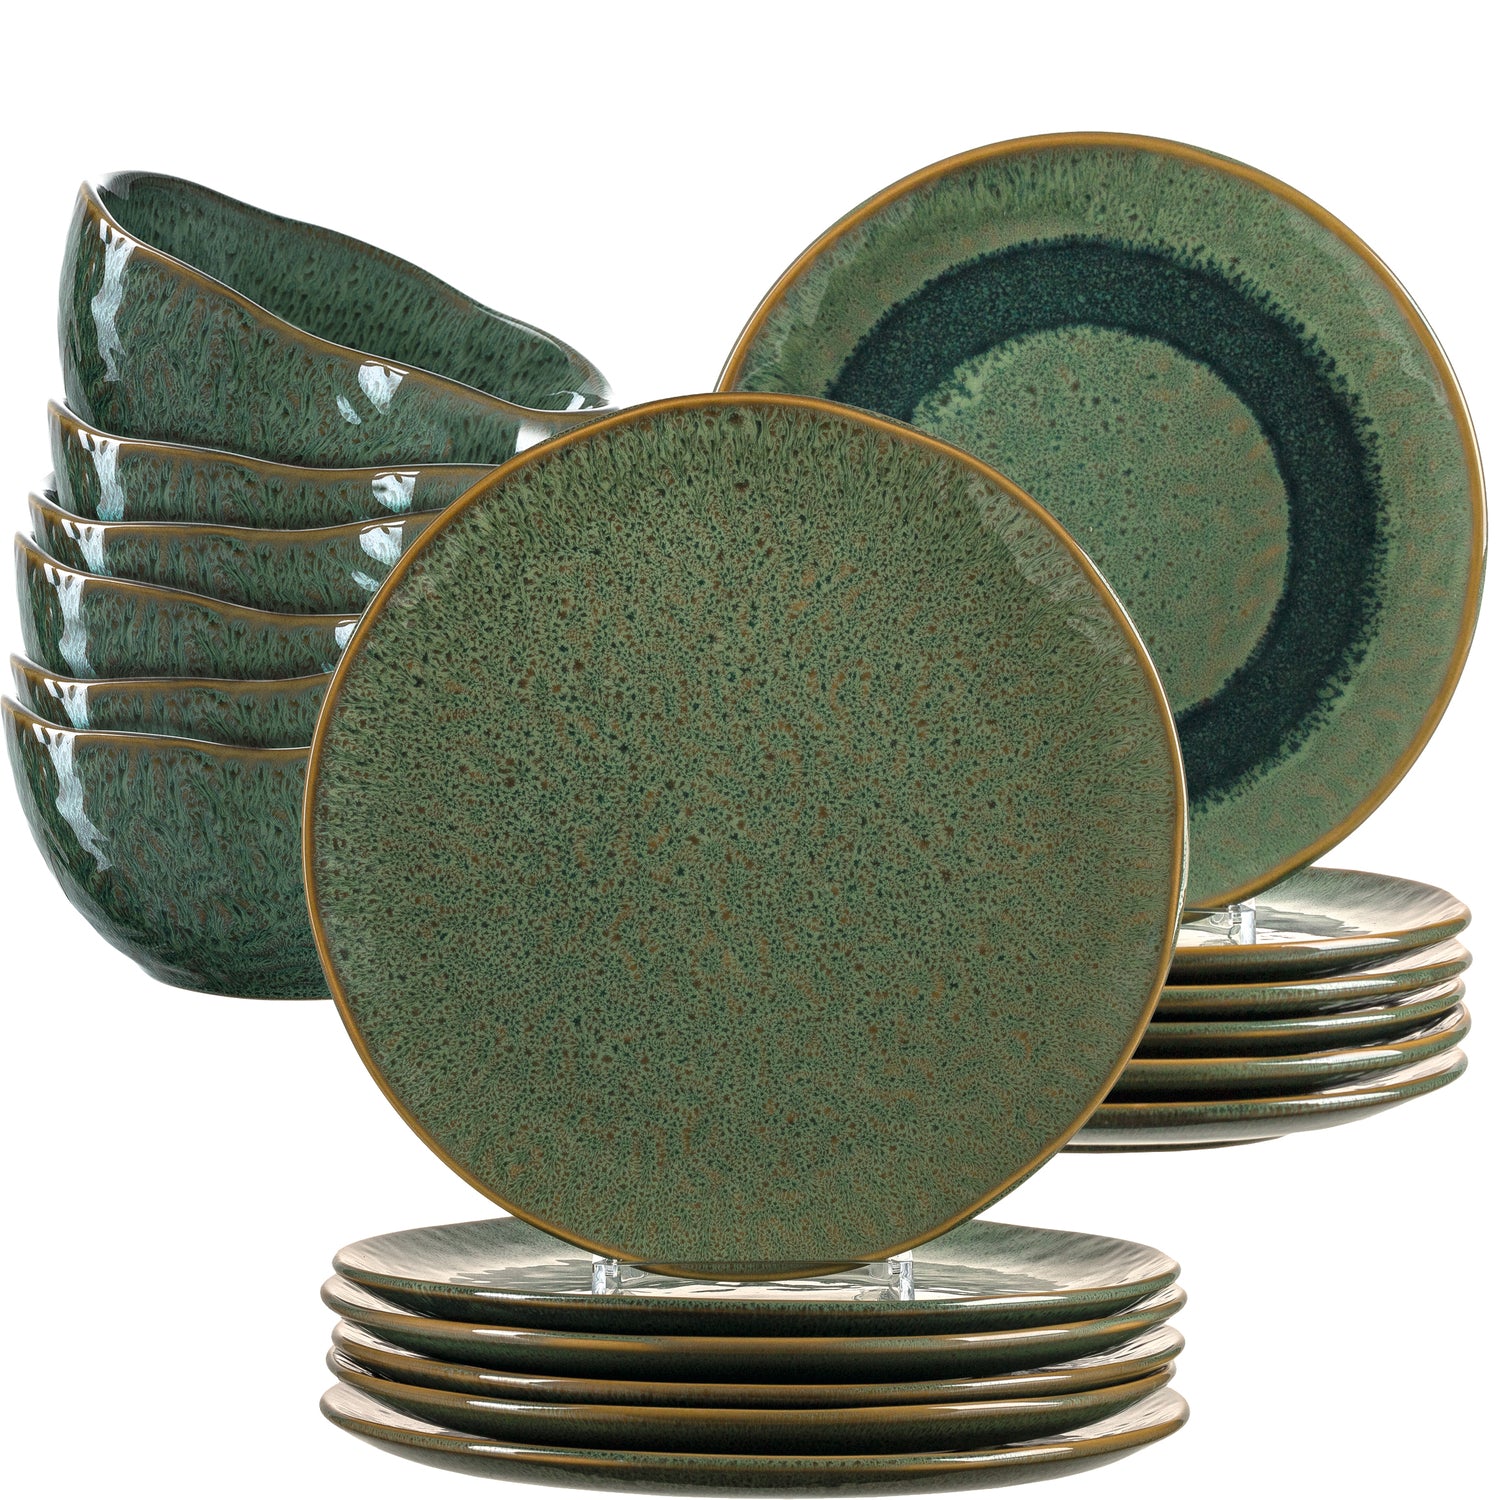 Geschirrset MATERA 18-teilig grün Keramik